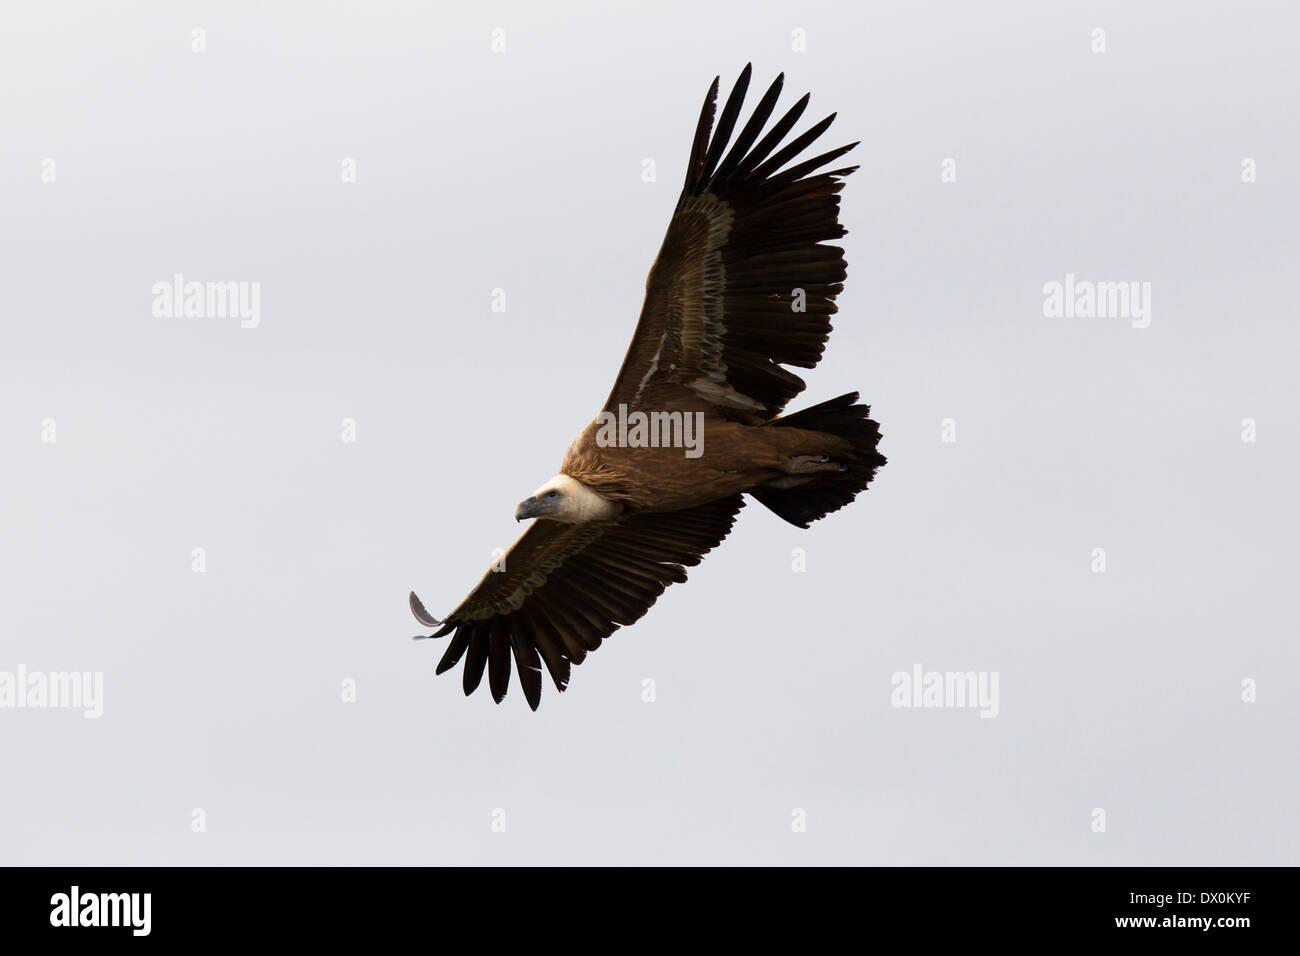 Griffon Vulture, Gänsegeier, Gyps fulvus, Monfragüe National Park, Spain, Extremadura, soaring Stock Photo